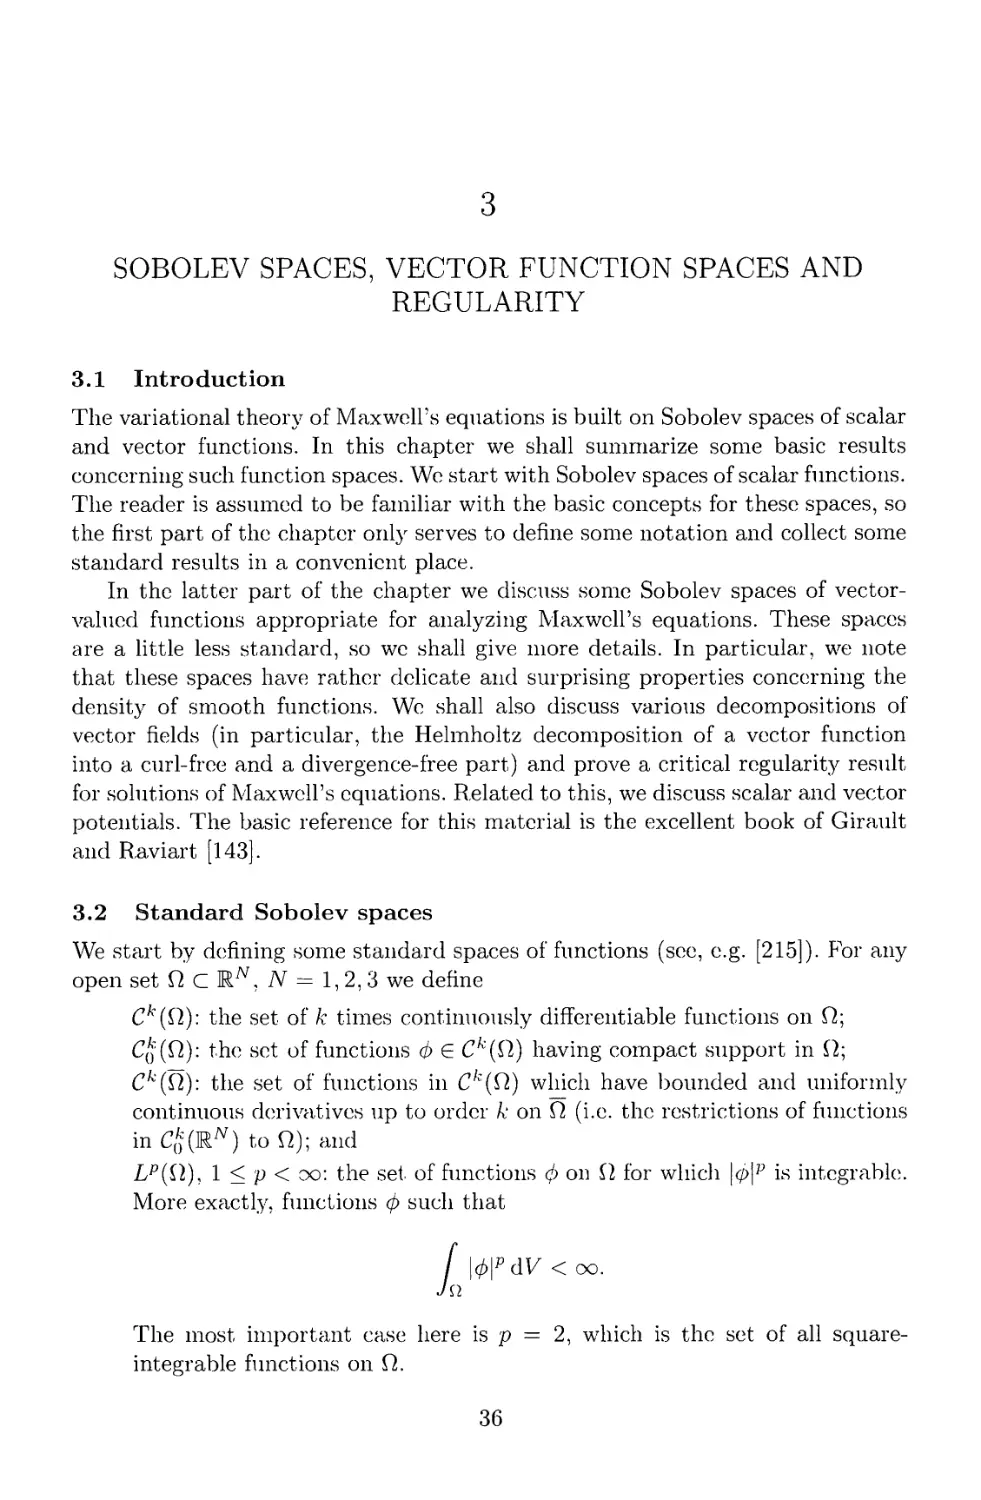 3 Sobolev spaces, vector function spaces and regularity
3.2 Standard Sobolev spaces